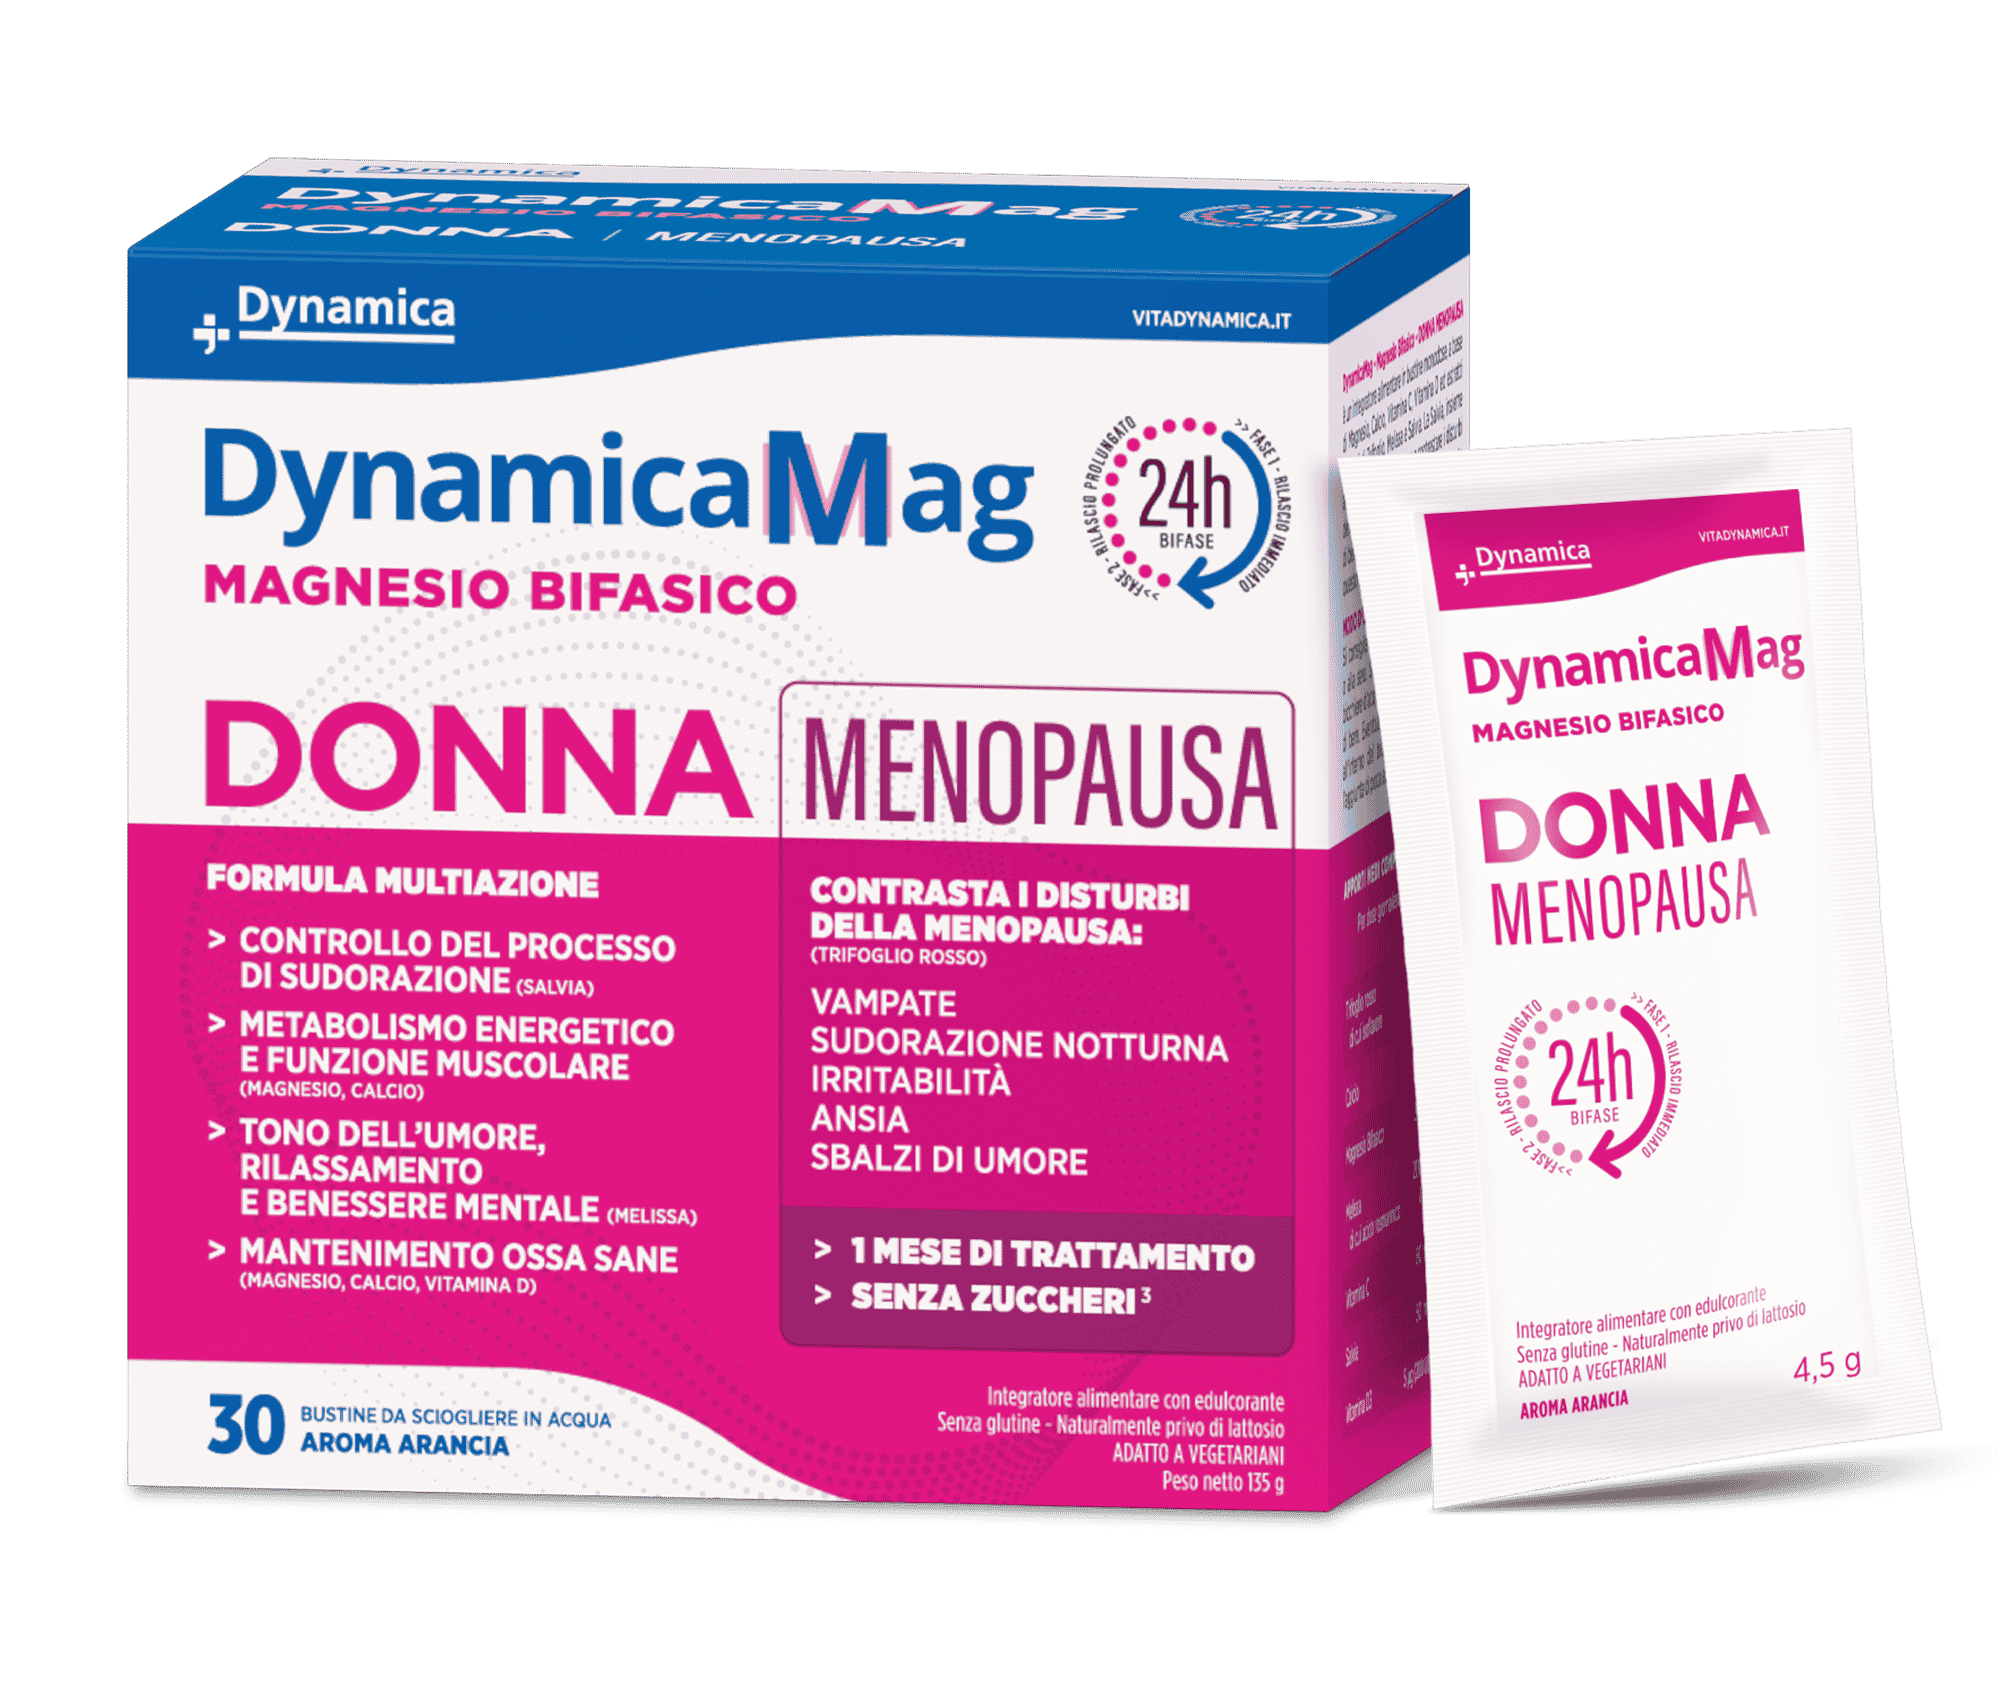 DynamicaMag Donna Menopausa - Pack